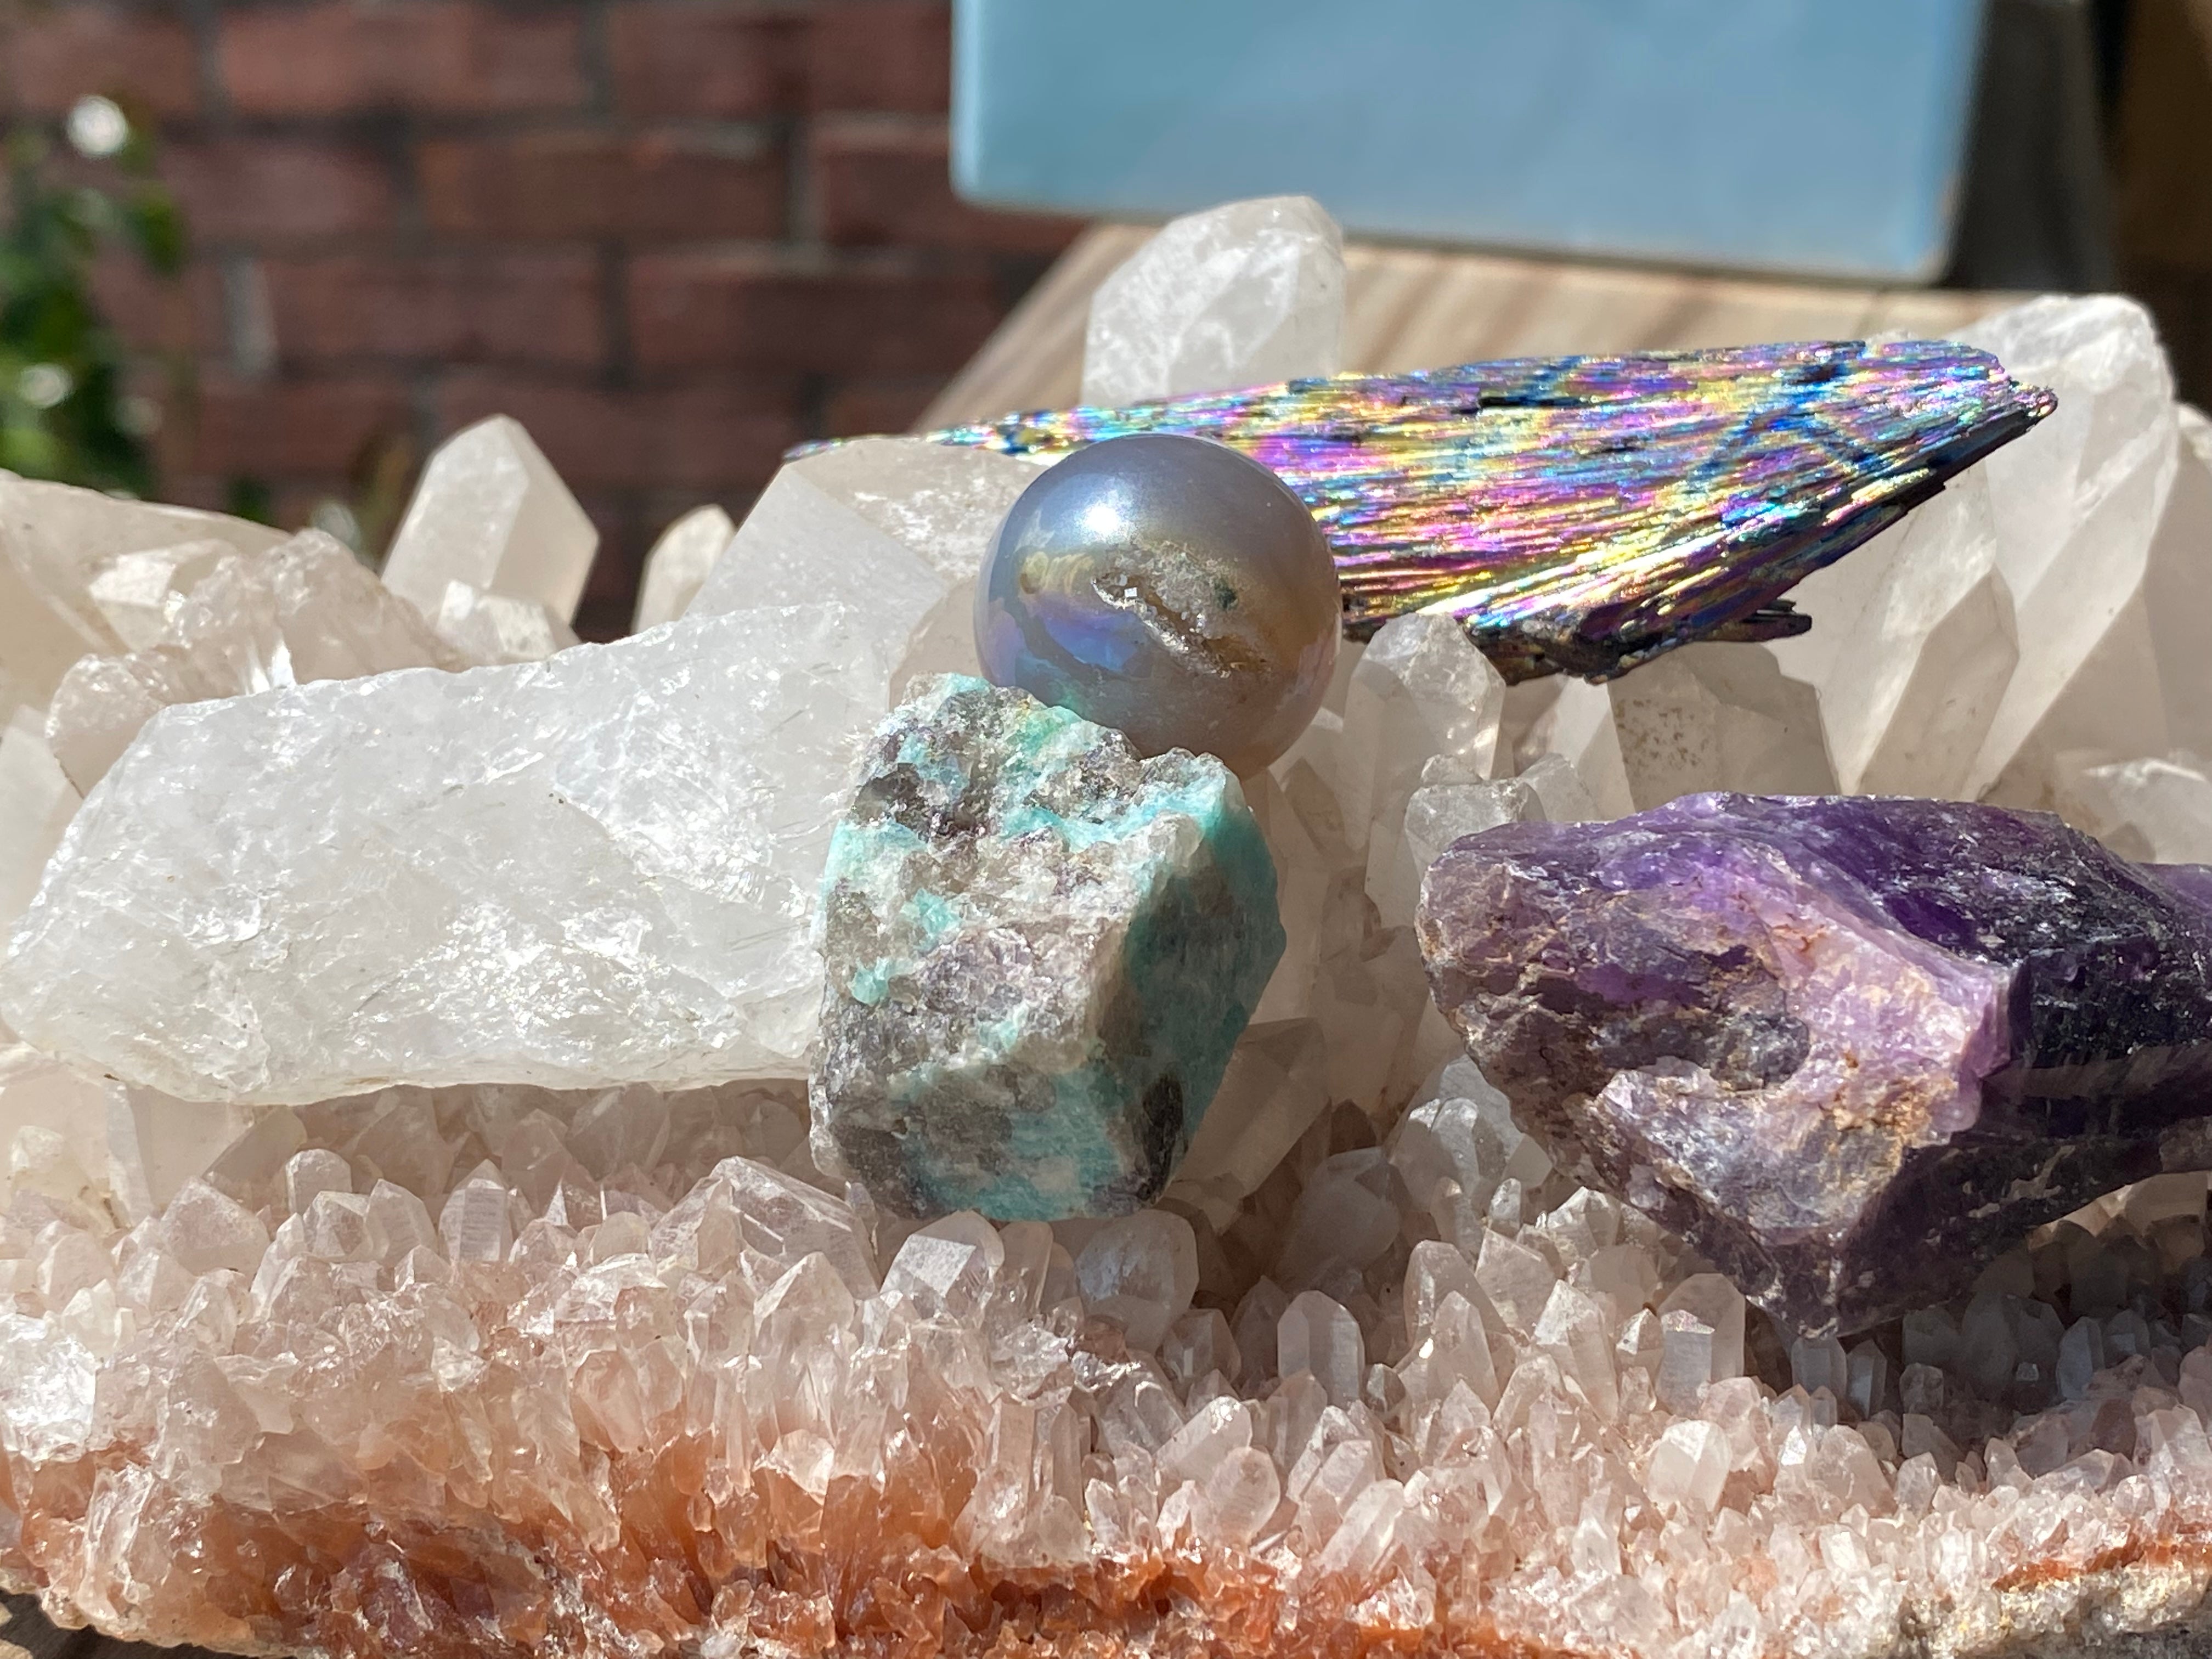 Translucent Dark Purple AB Jelly Stone – Crystal Bay Supplies